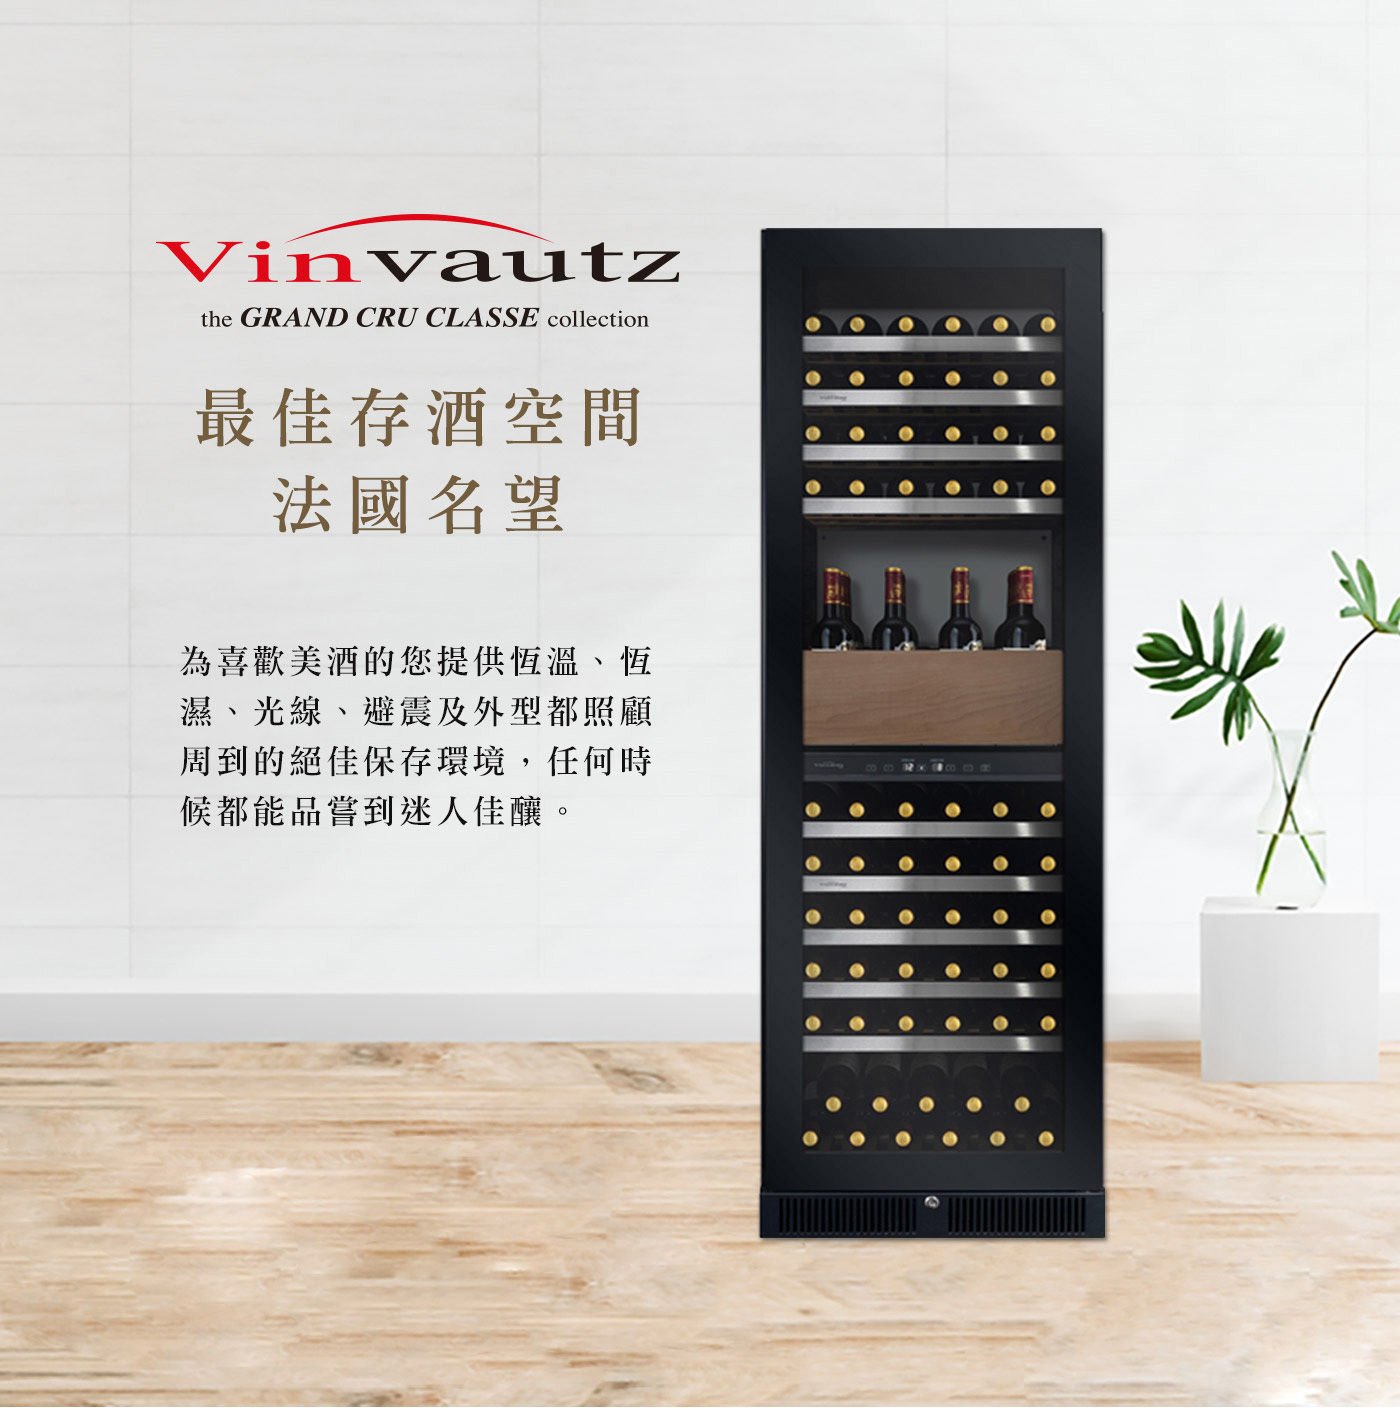 Vinvautz 雙溫區酒櫃 140瓶入 最佳存酒空間法國名望 為喜歡美酒的您提供恆溫恆濕光線避震及外型都照顧周到的保存環境